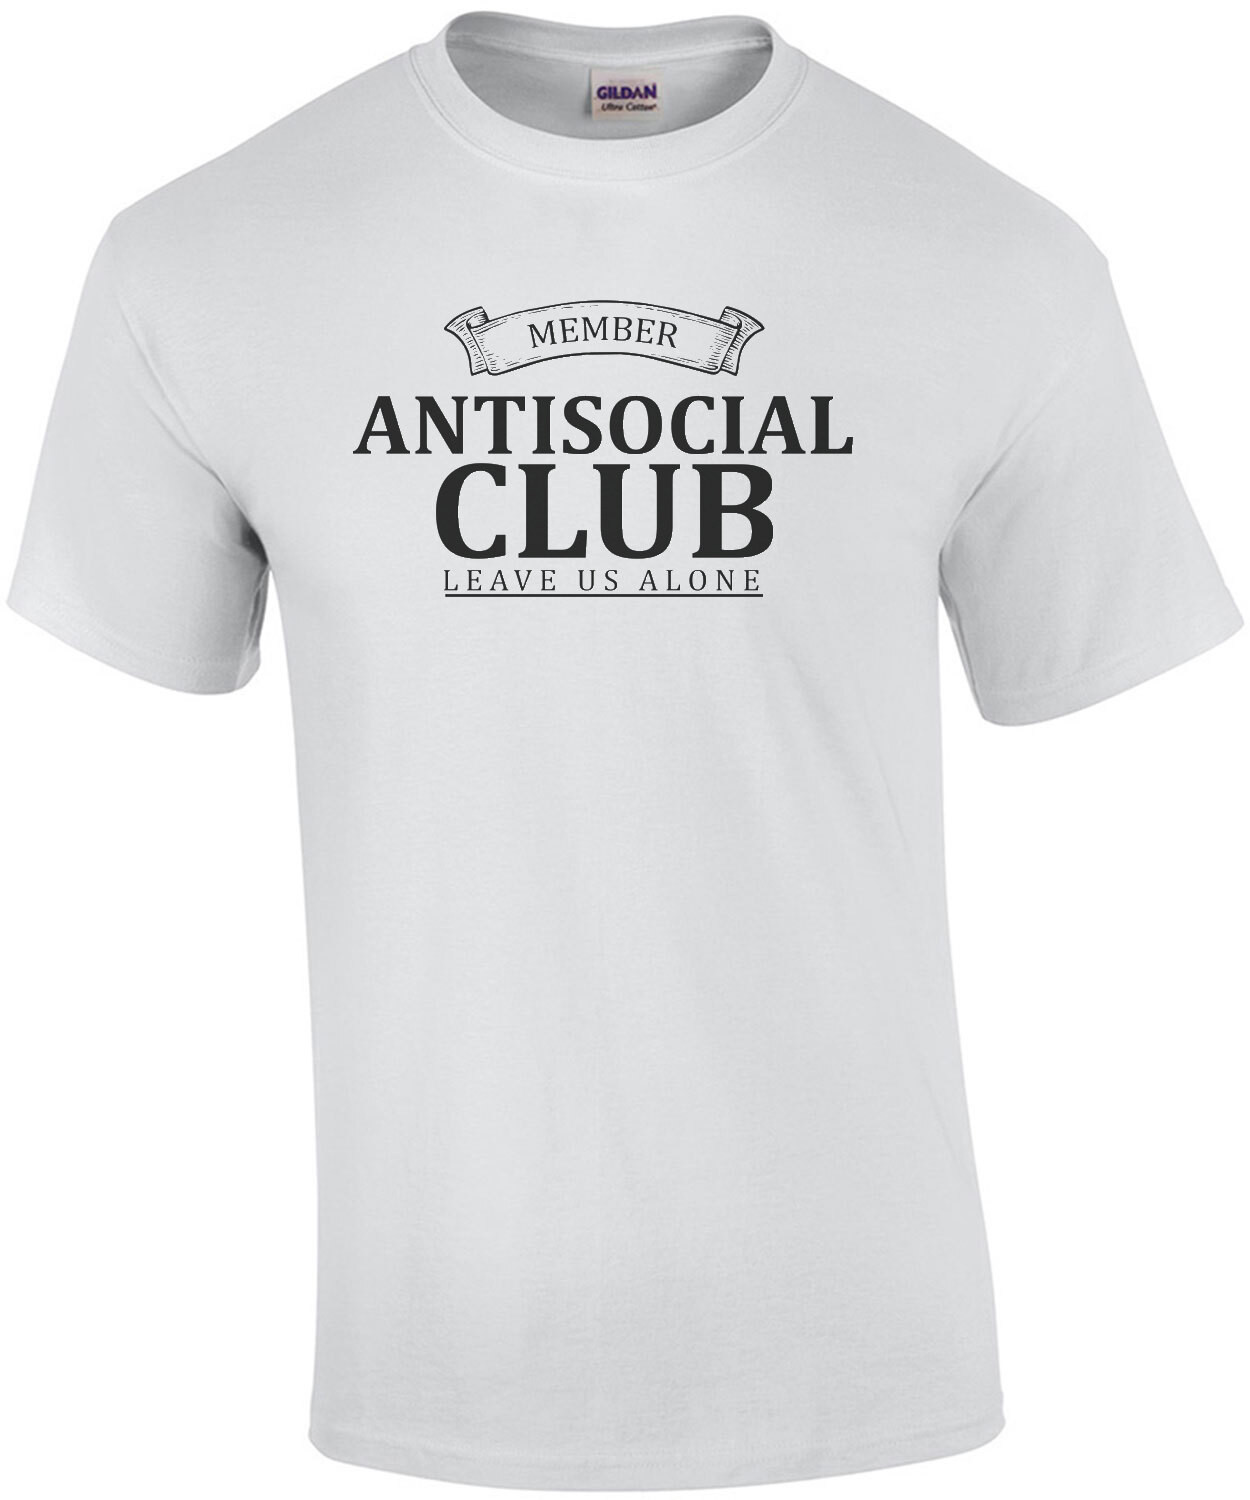 Antisocial Club Member - Leave us alone - sarcastic t-Shirt